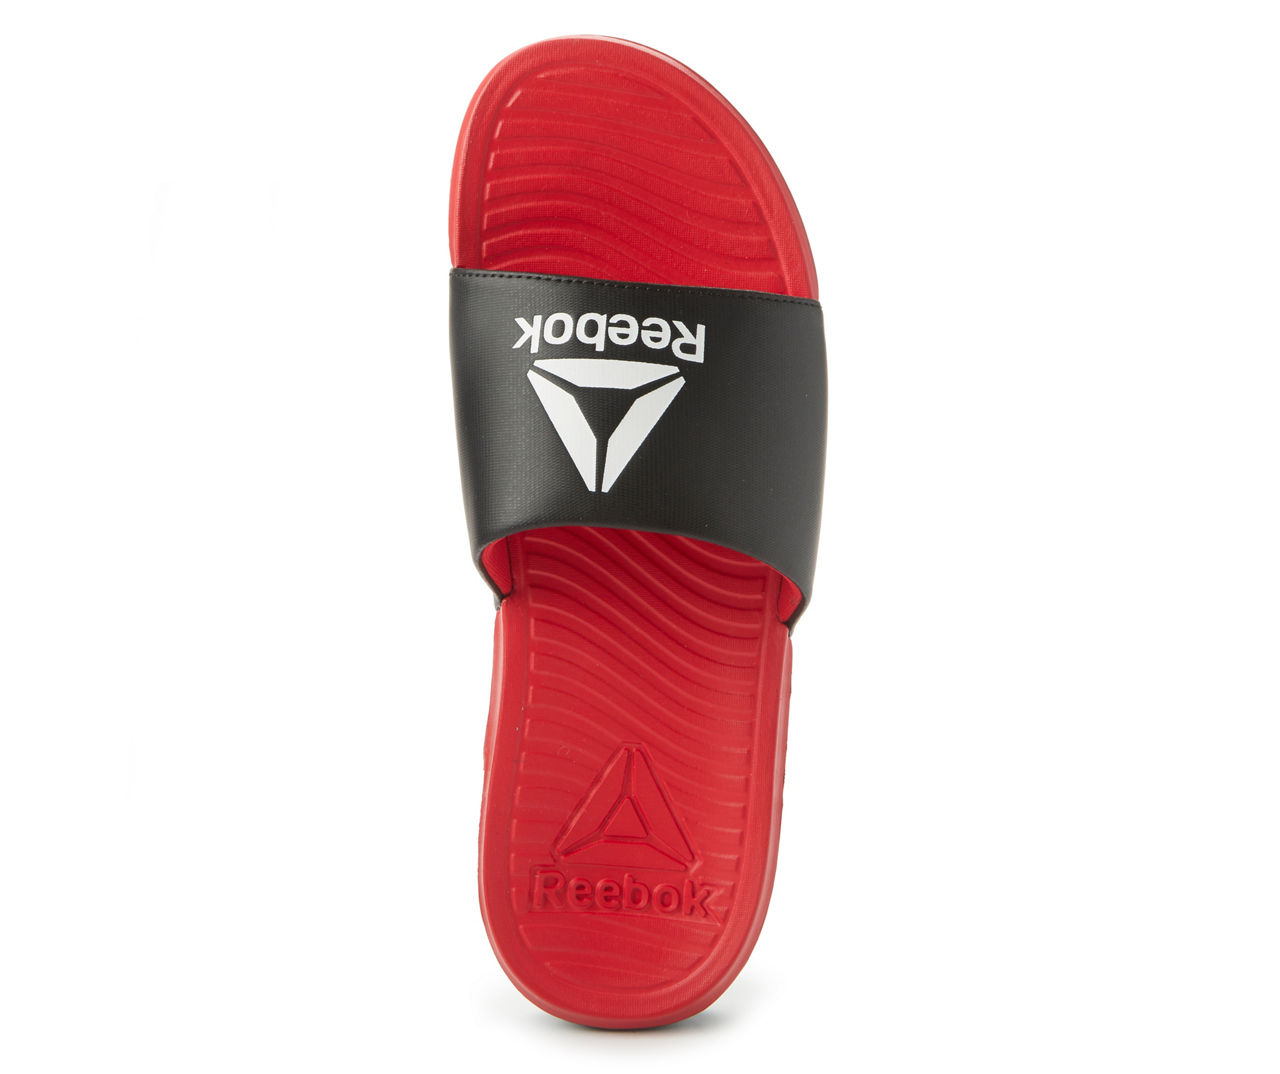 Reebok Men's Red Slide Sandals | Lots